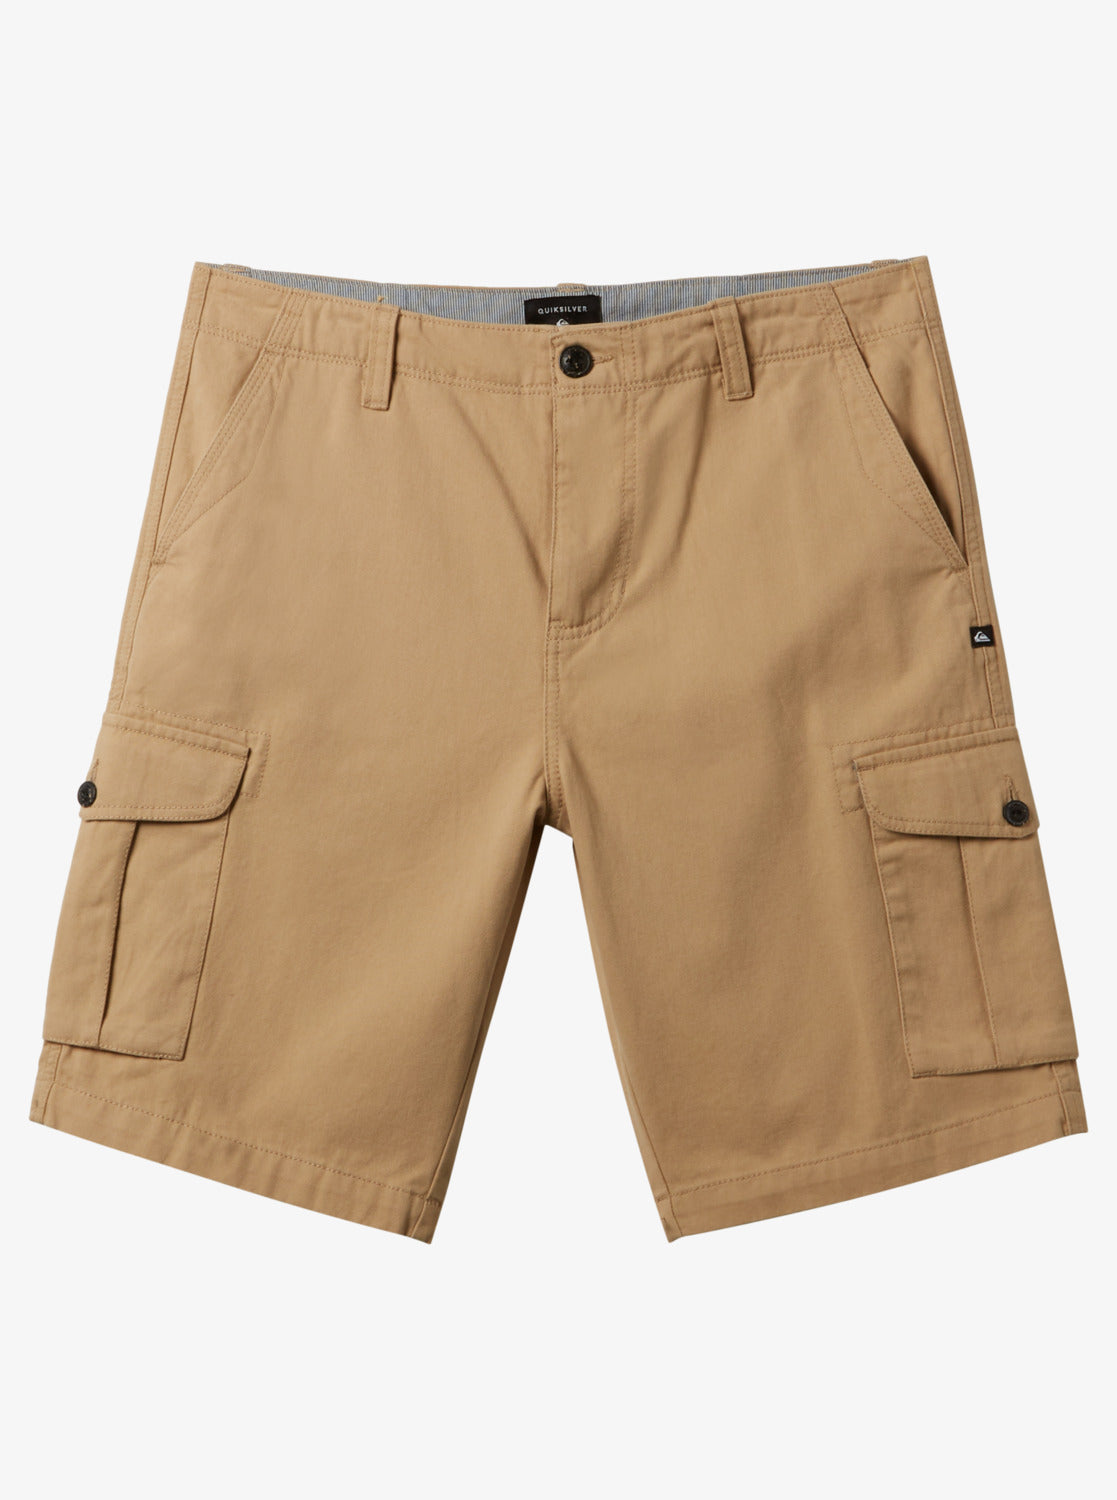 Crucial Battle Cargo Shorts - Khaki